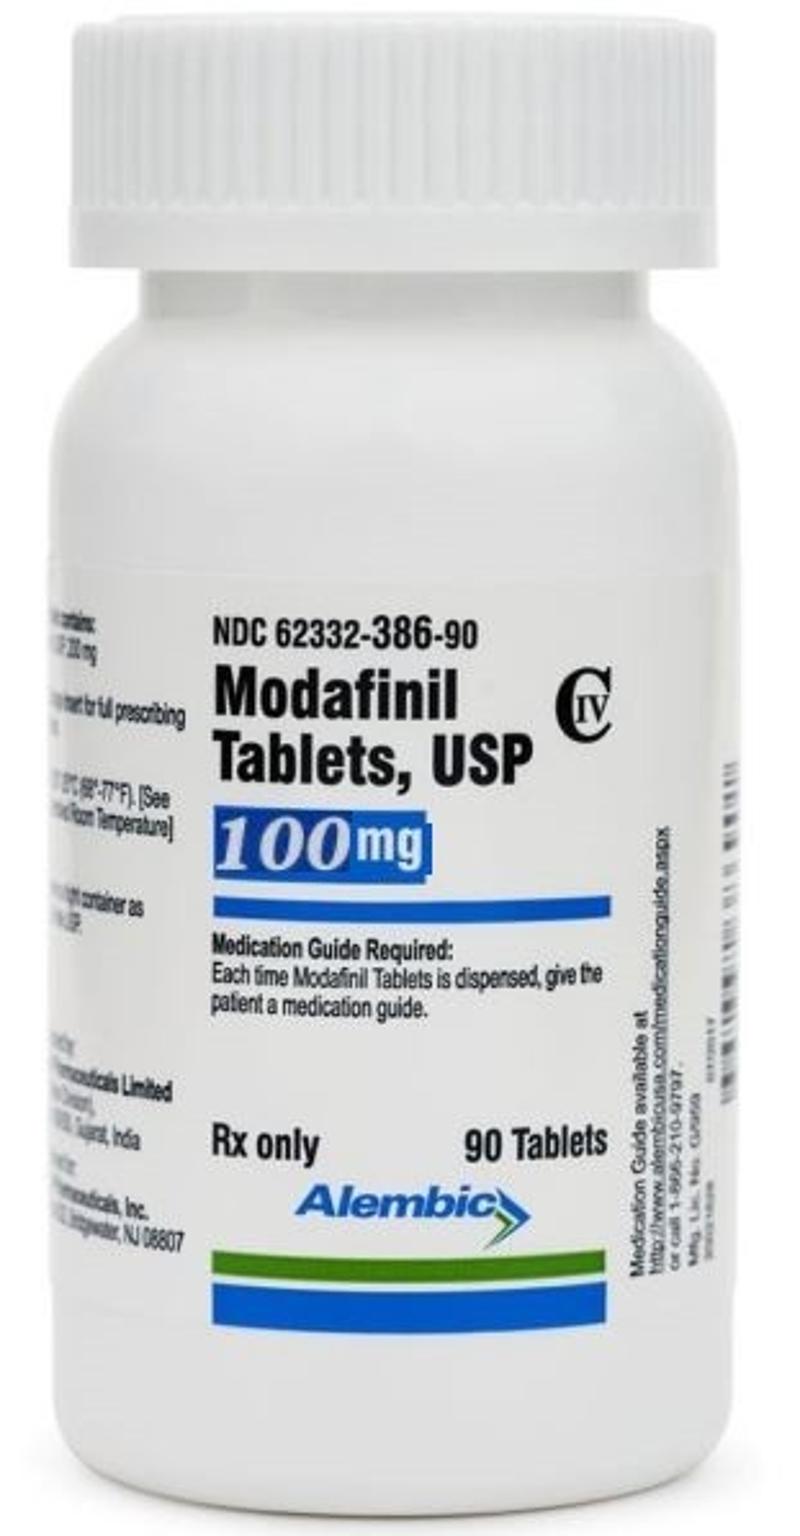 Buy Modanifil 100mg Tablets Online